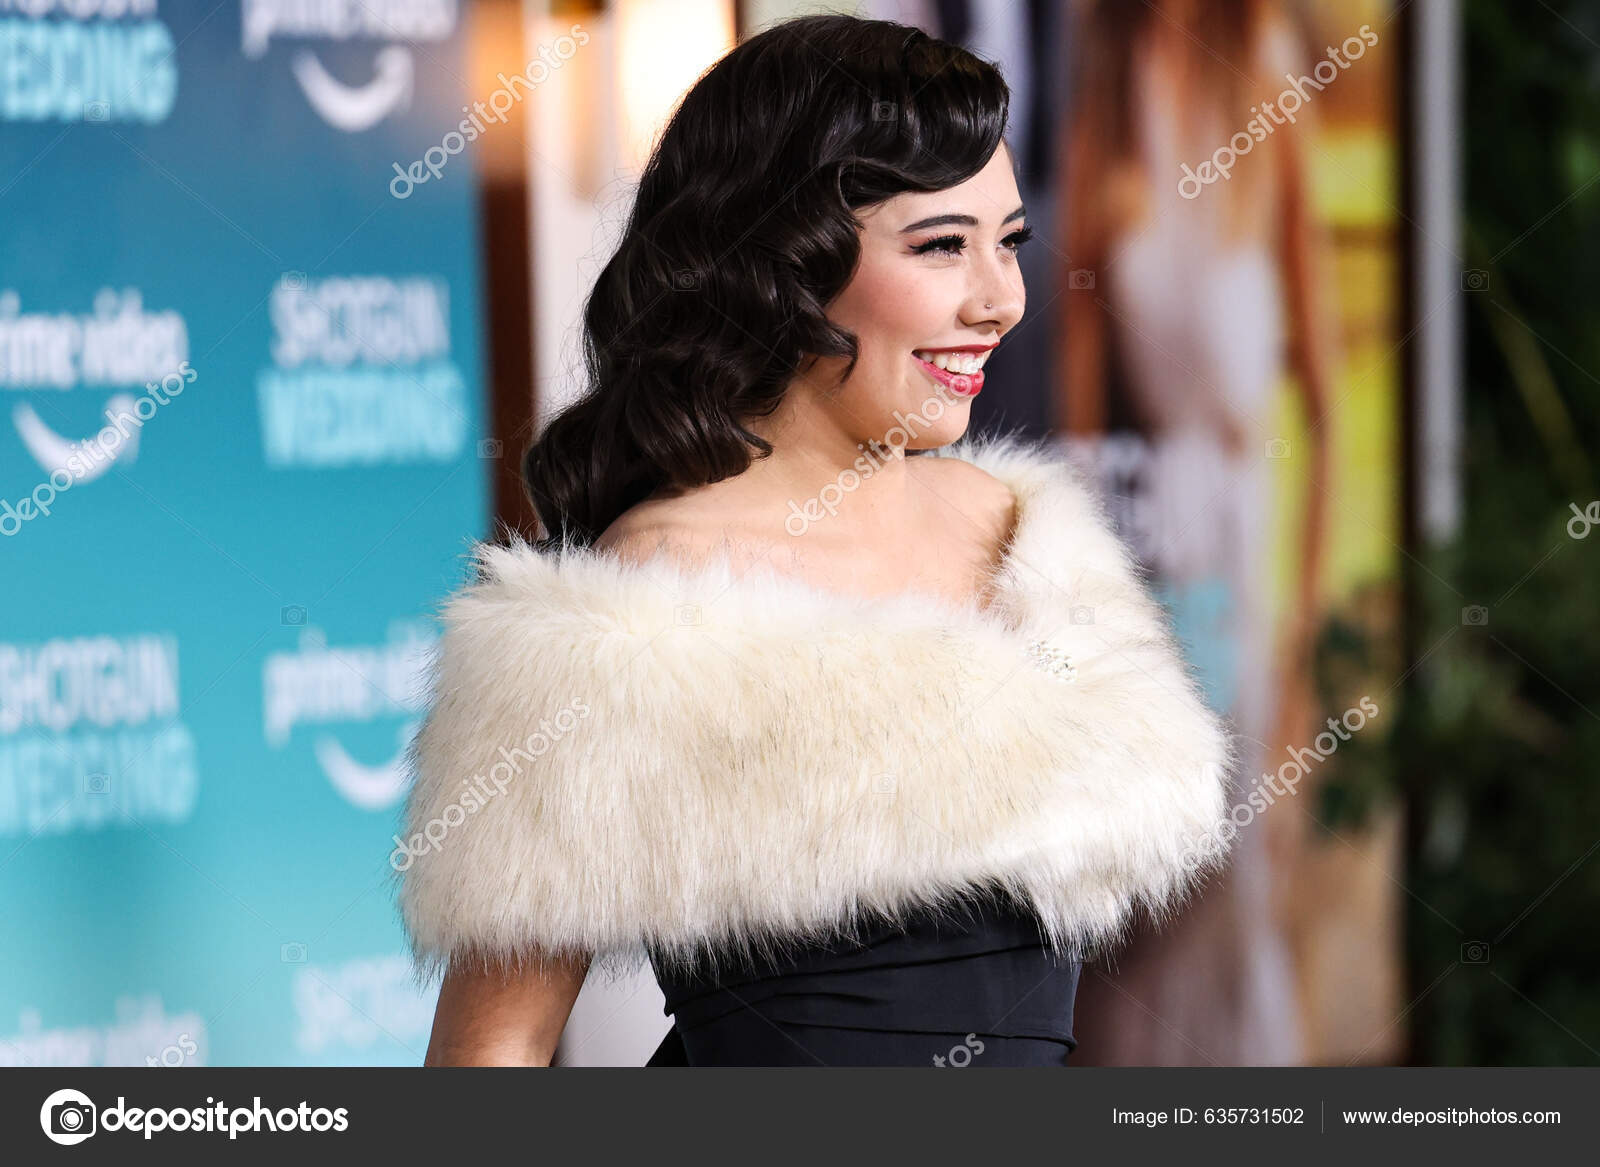 American Actress Xochitl Gomez Arrives Los Angeles Premiere Amazon Prime -  Stock redakční Foto © imagepressagency # 635731502